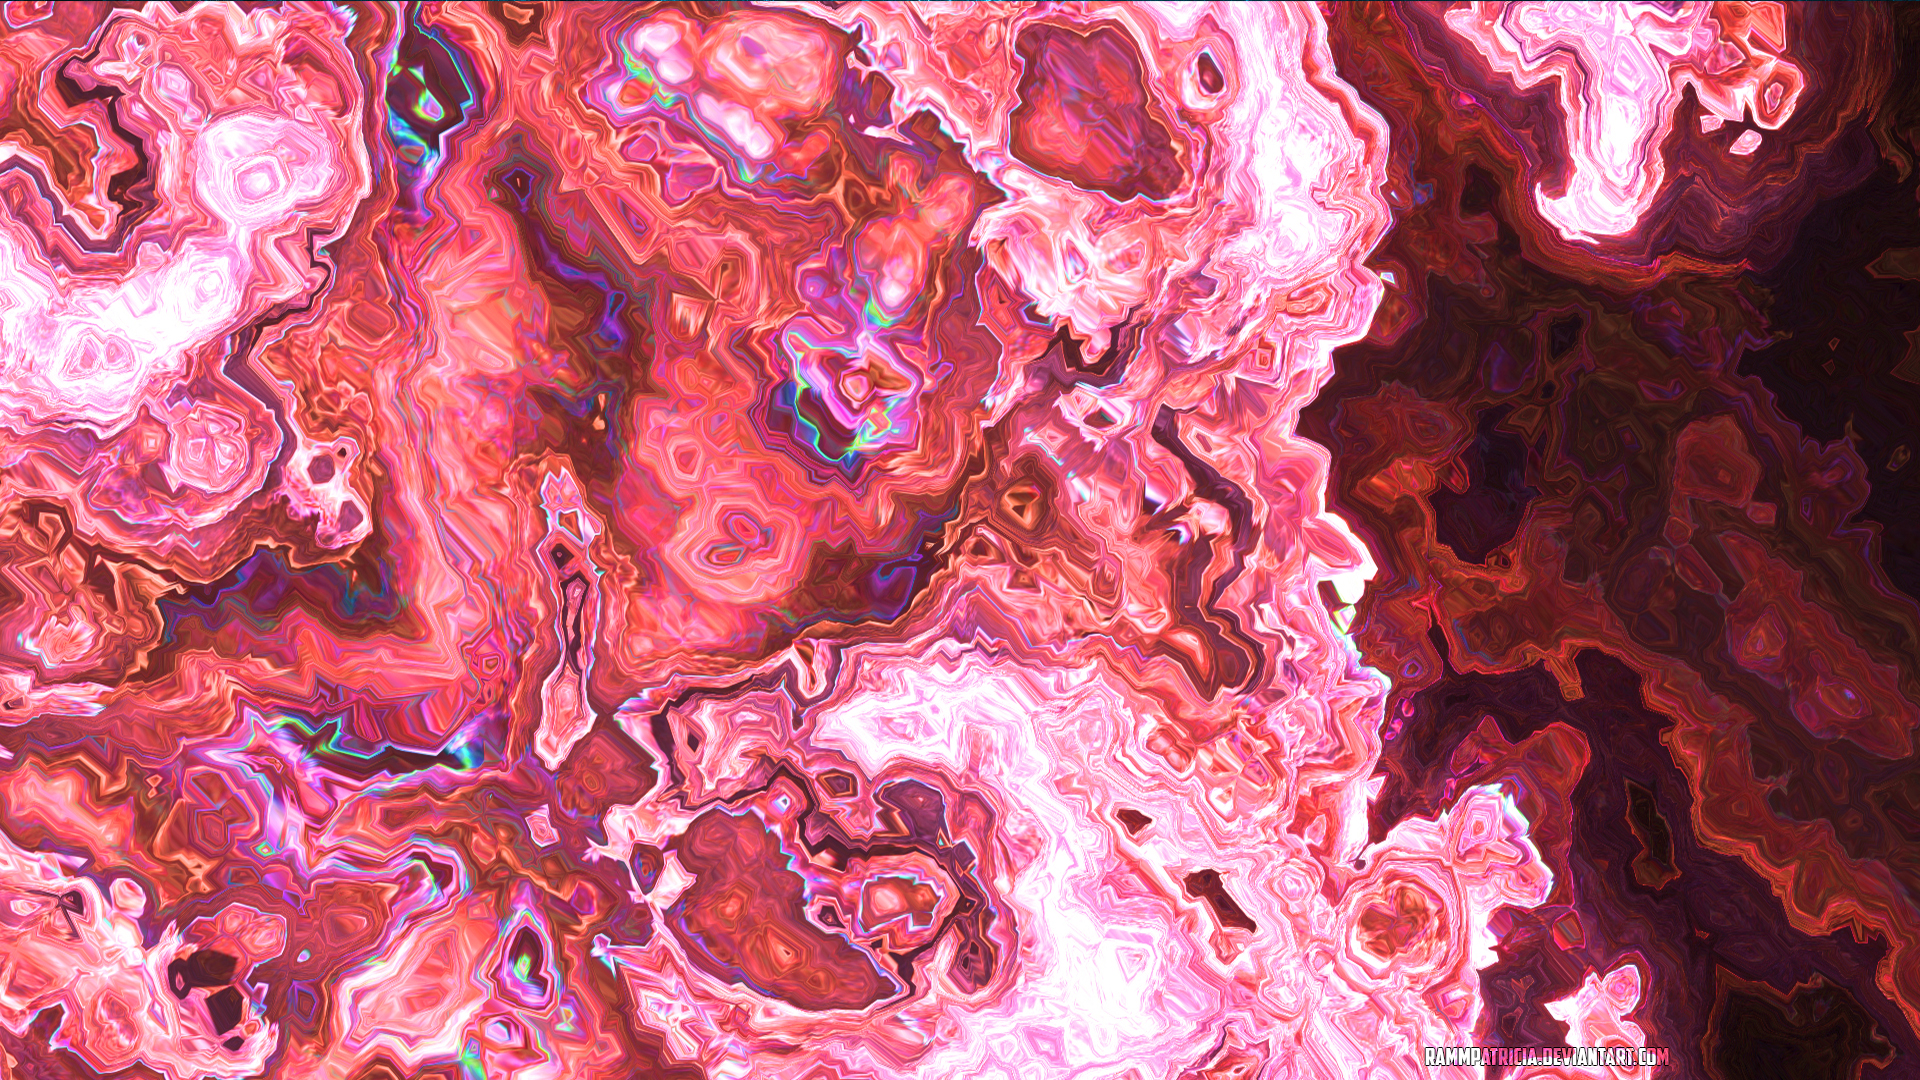 Abstract Digital Art RammPatricia Pink Red Artwork 1920x1080